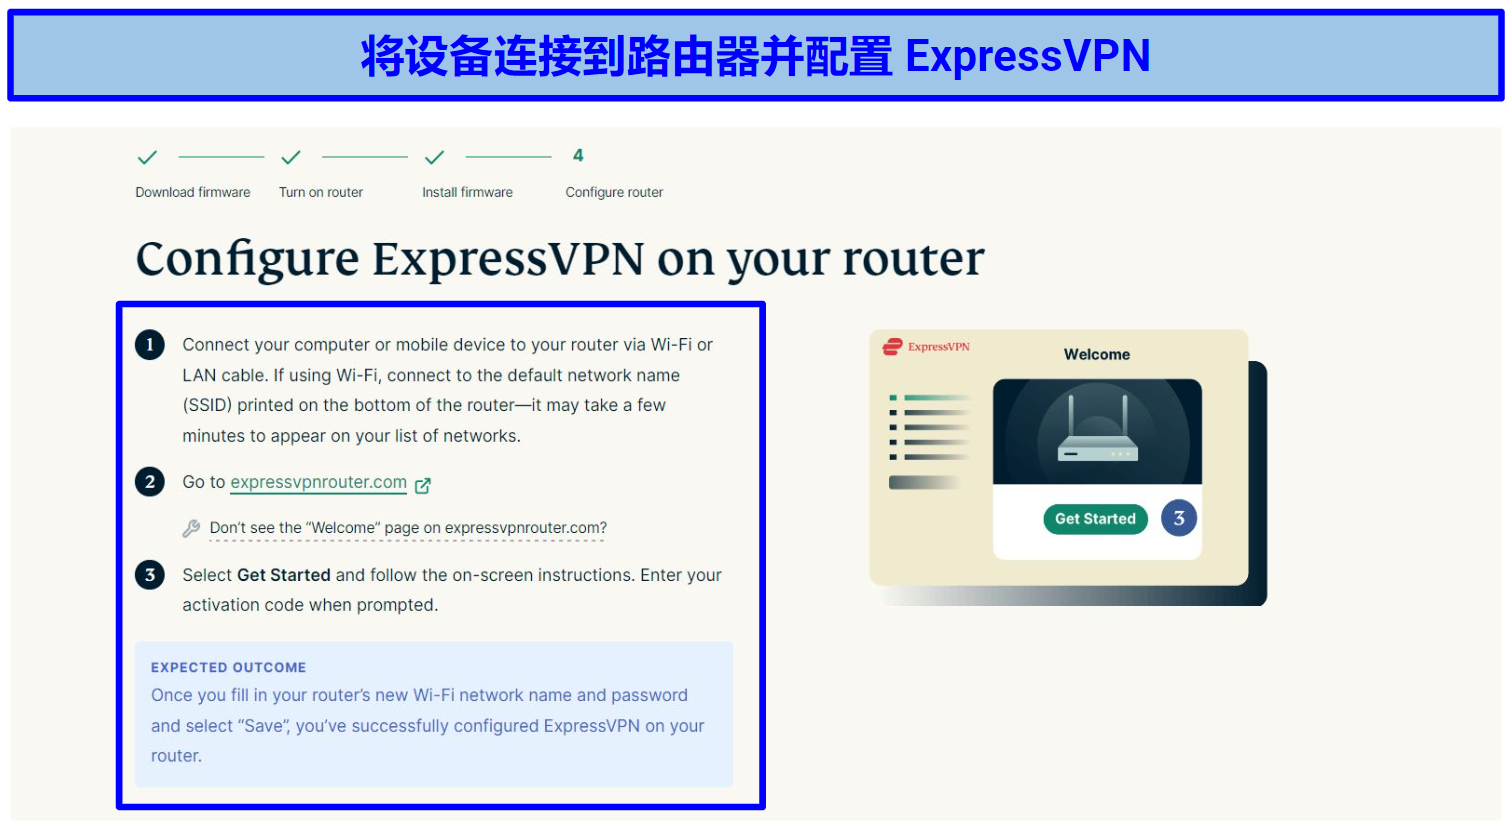 Screenshot of ExpressVPN's configuration guide